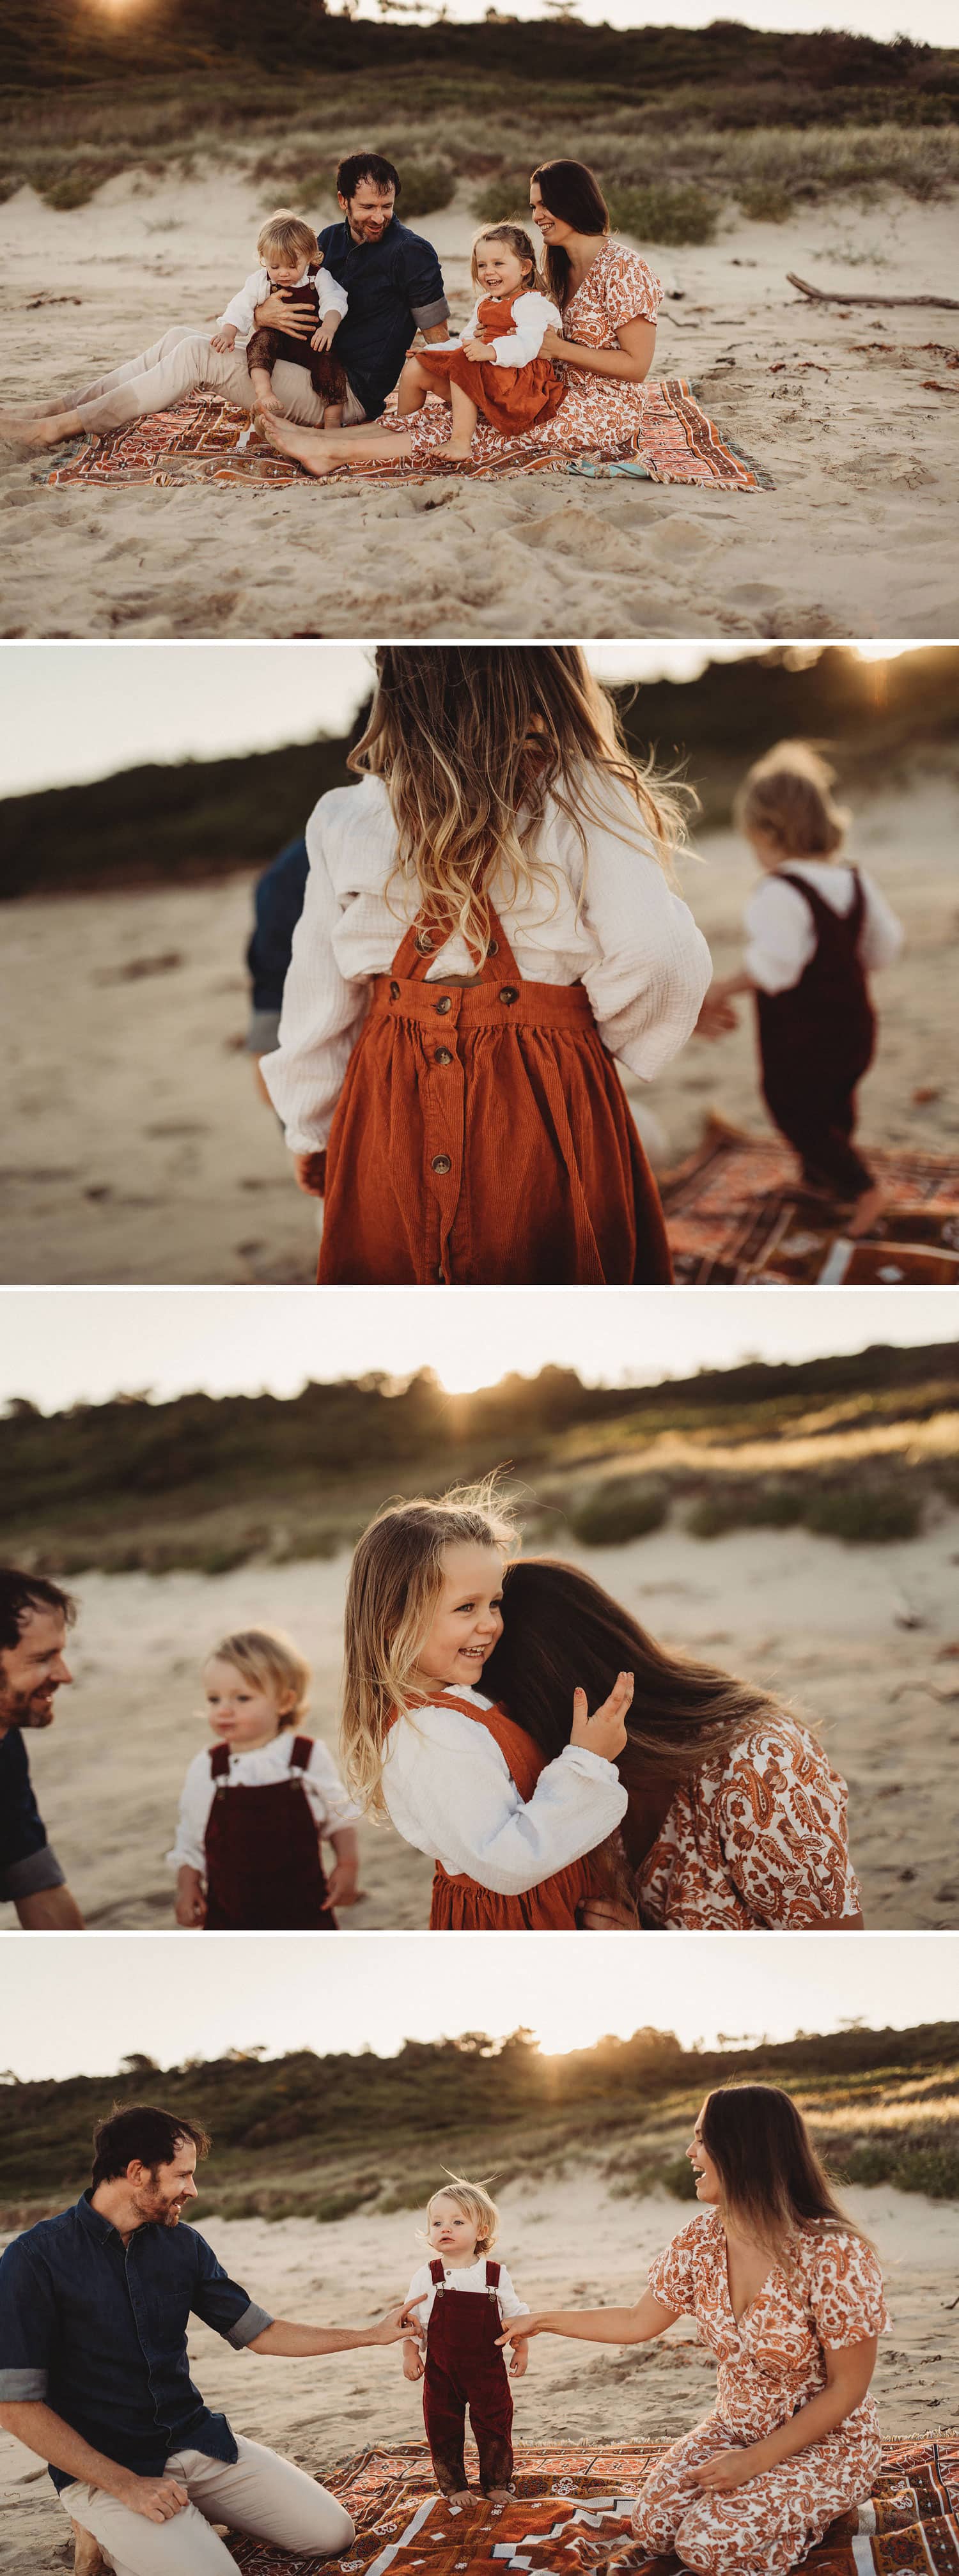 Lifestyle-family-photography-NSW-south-coast-c8